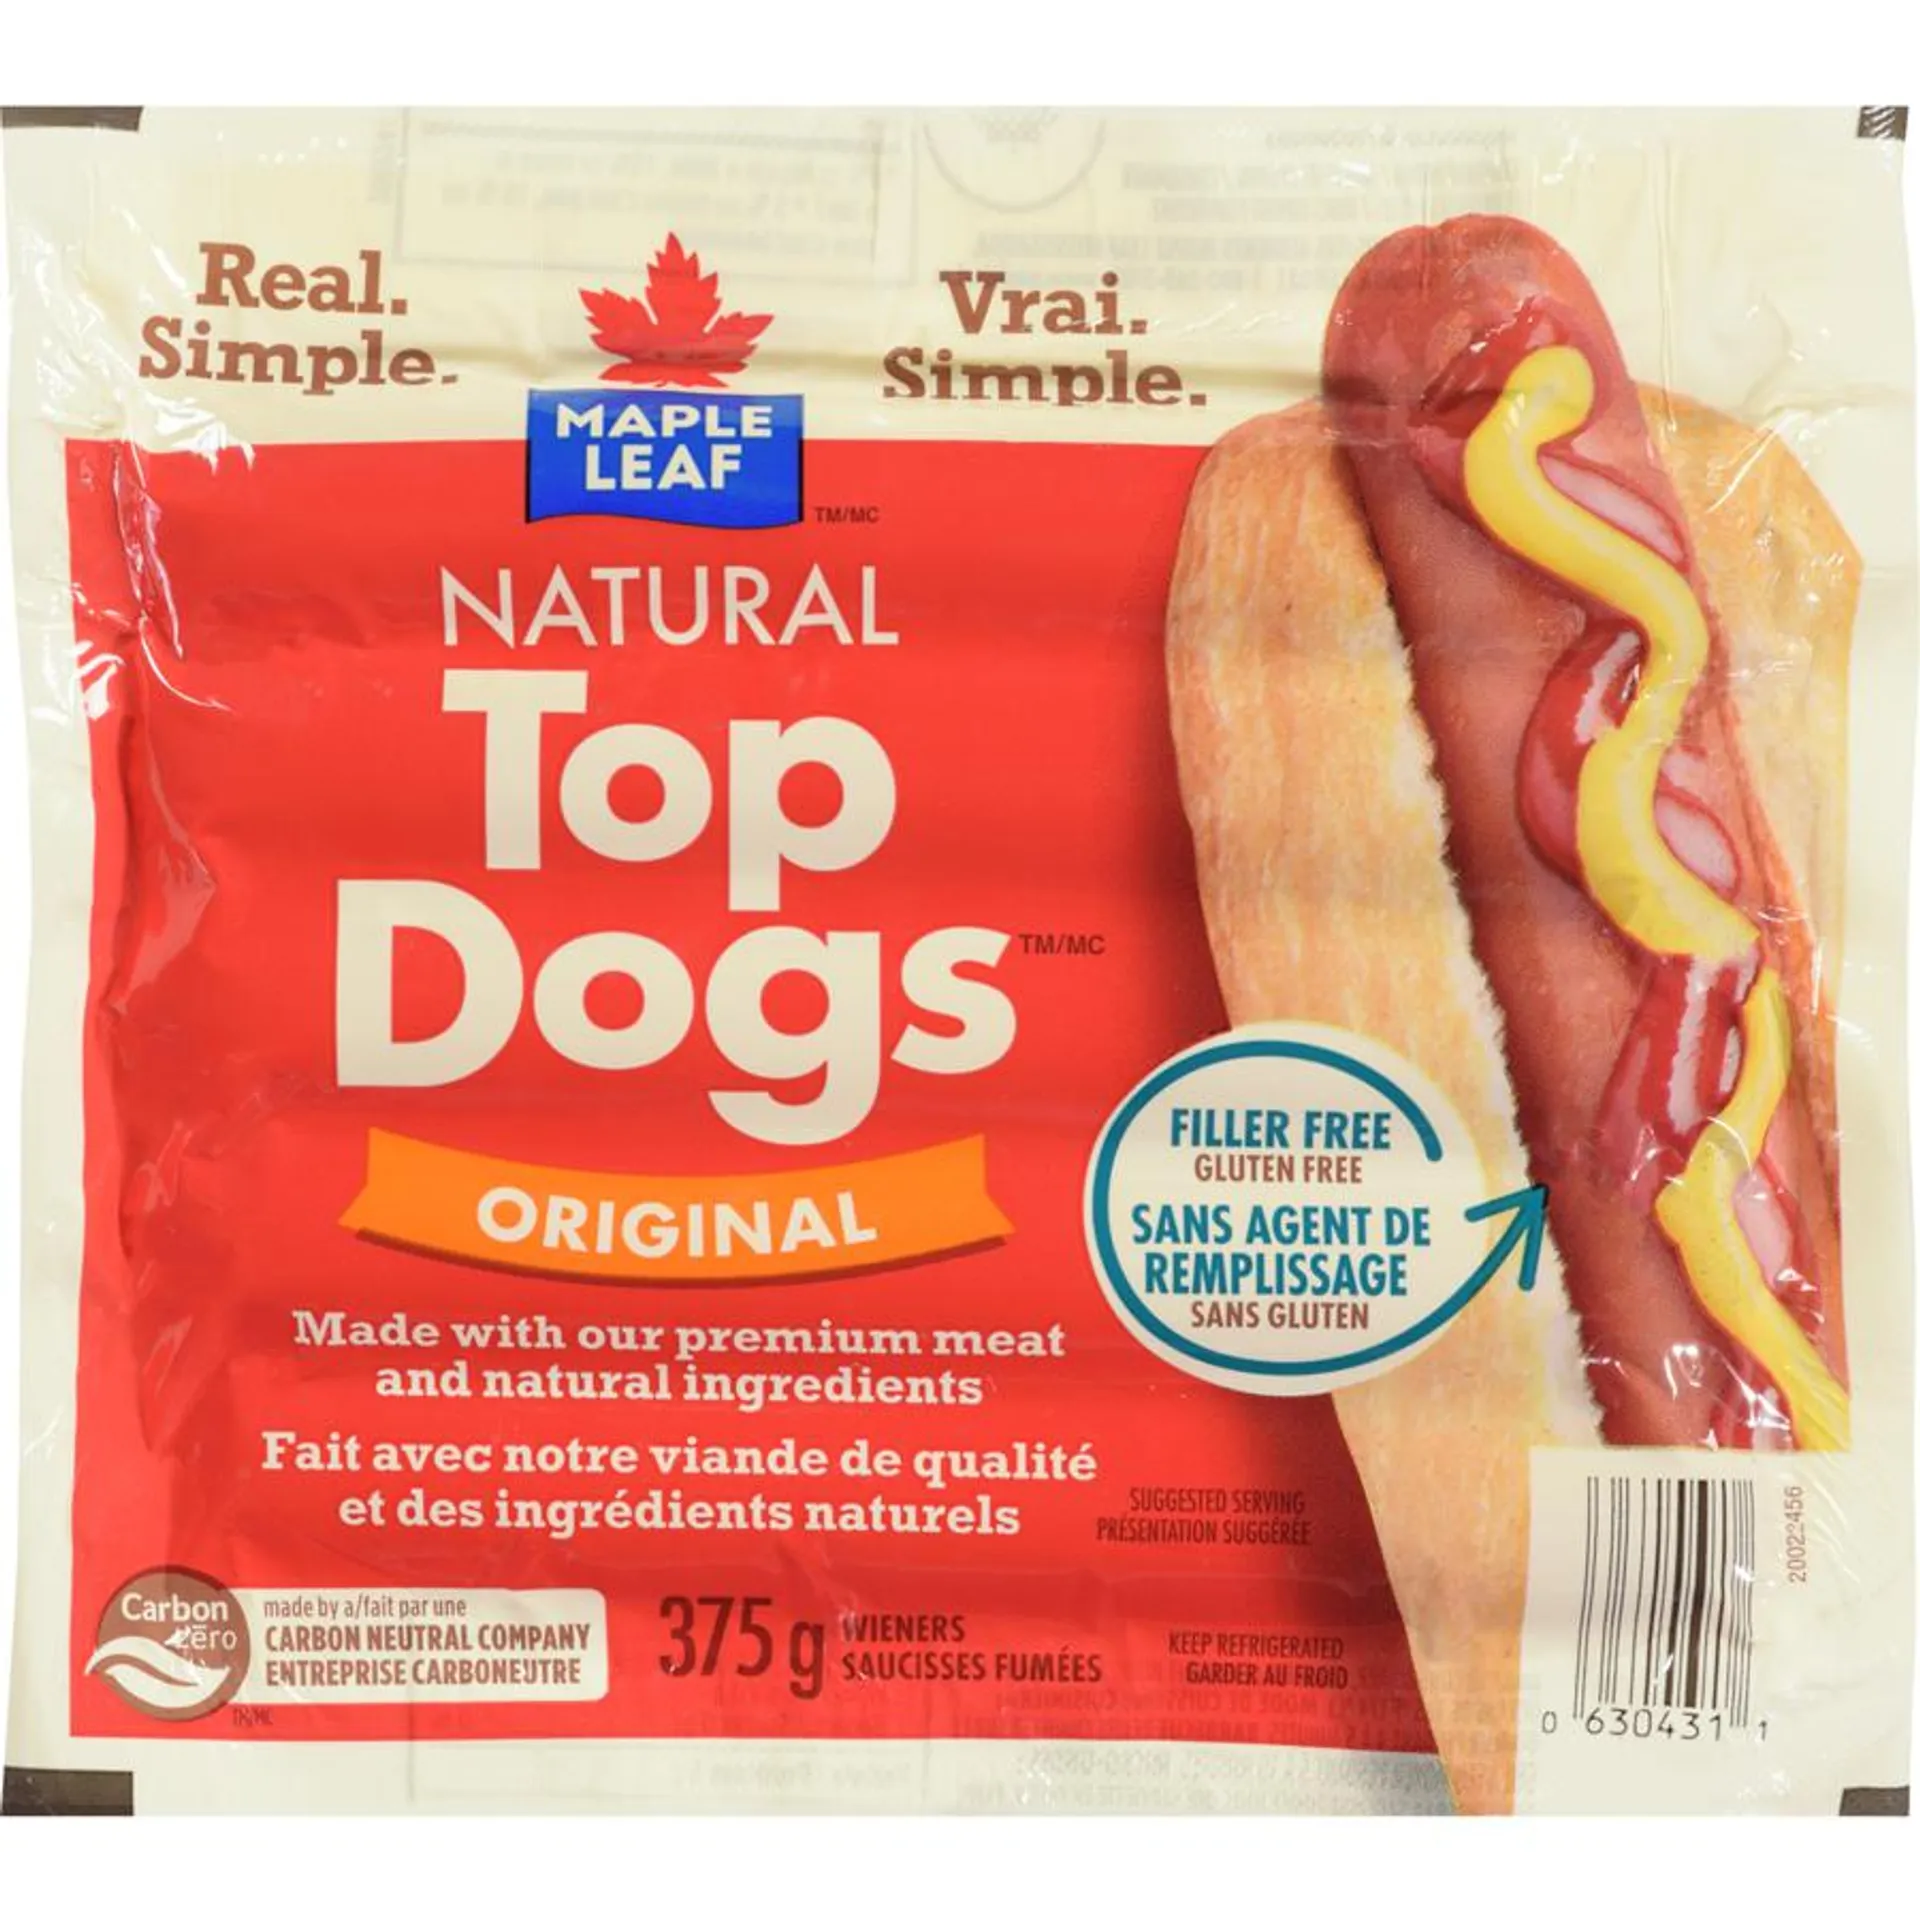 Natural Top Dogs Original Hot Dogs